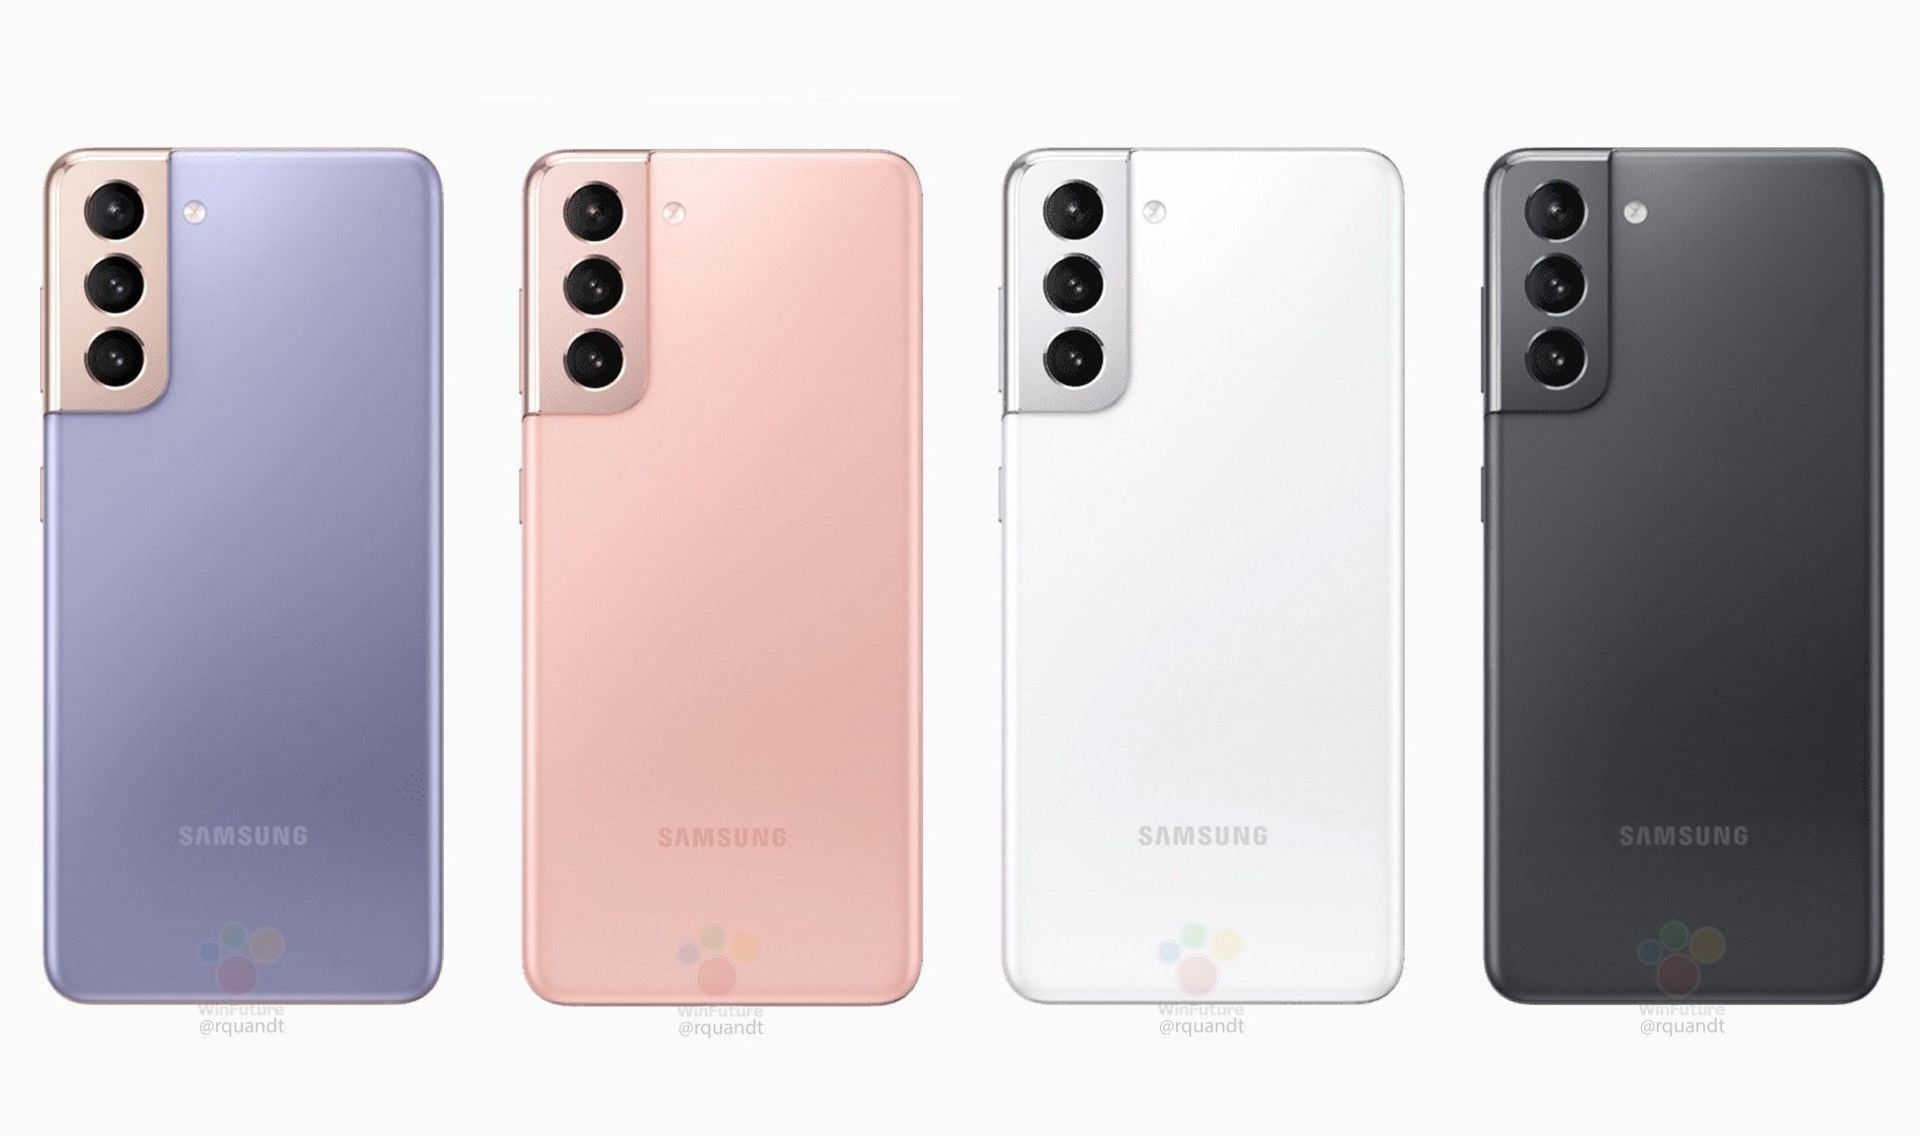 Samsung Galaxy S21 - SamMobile
